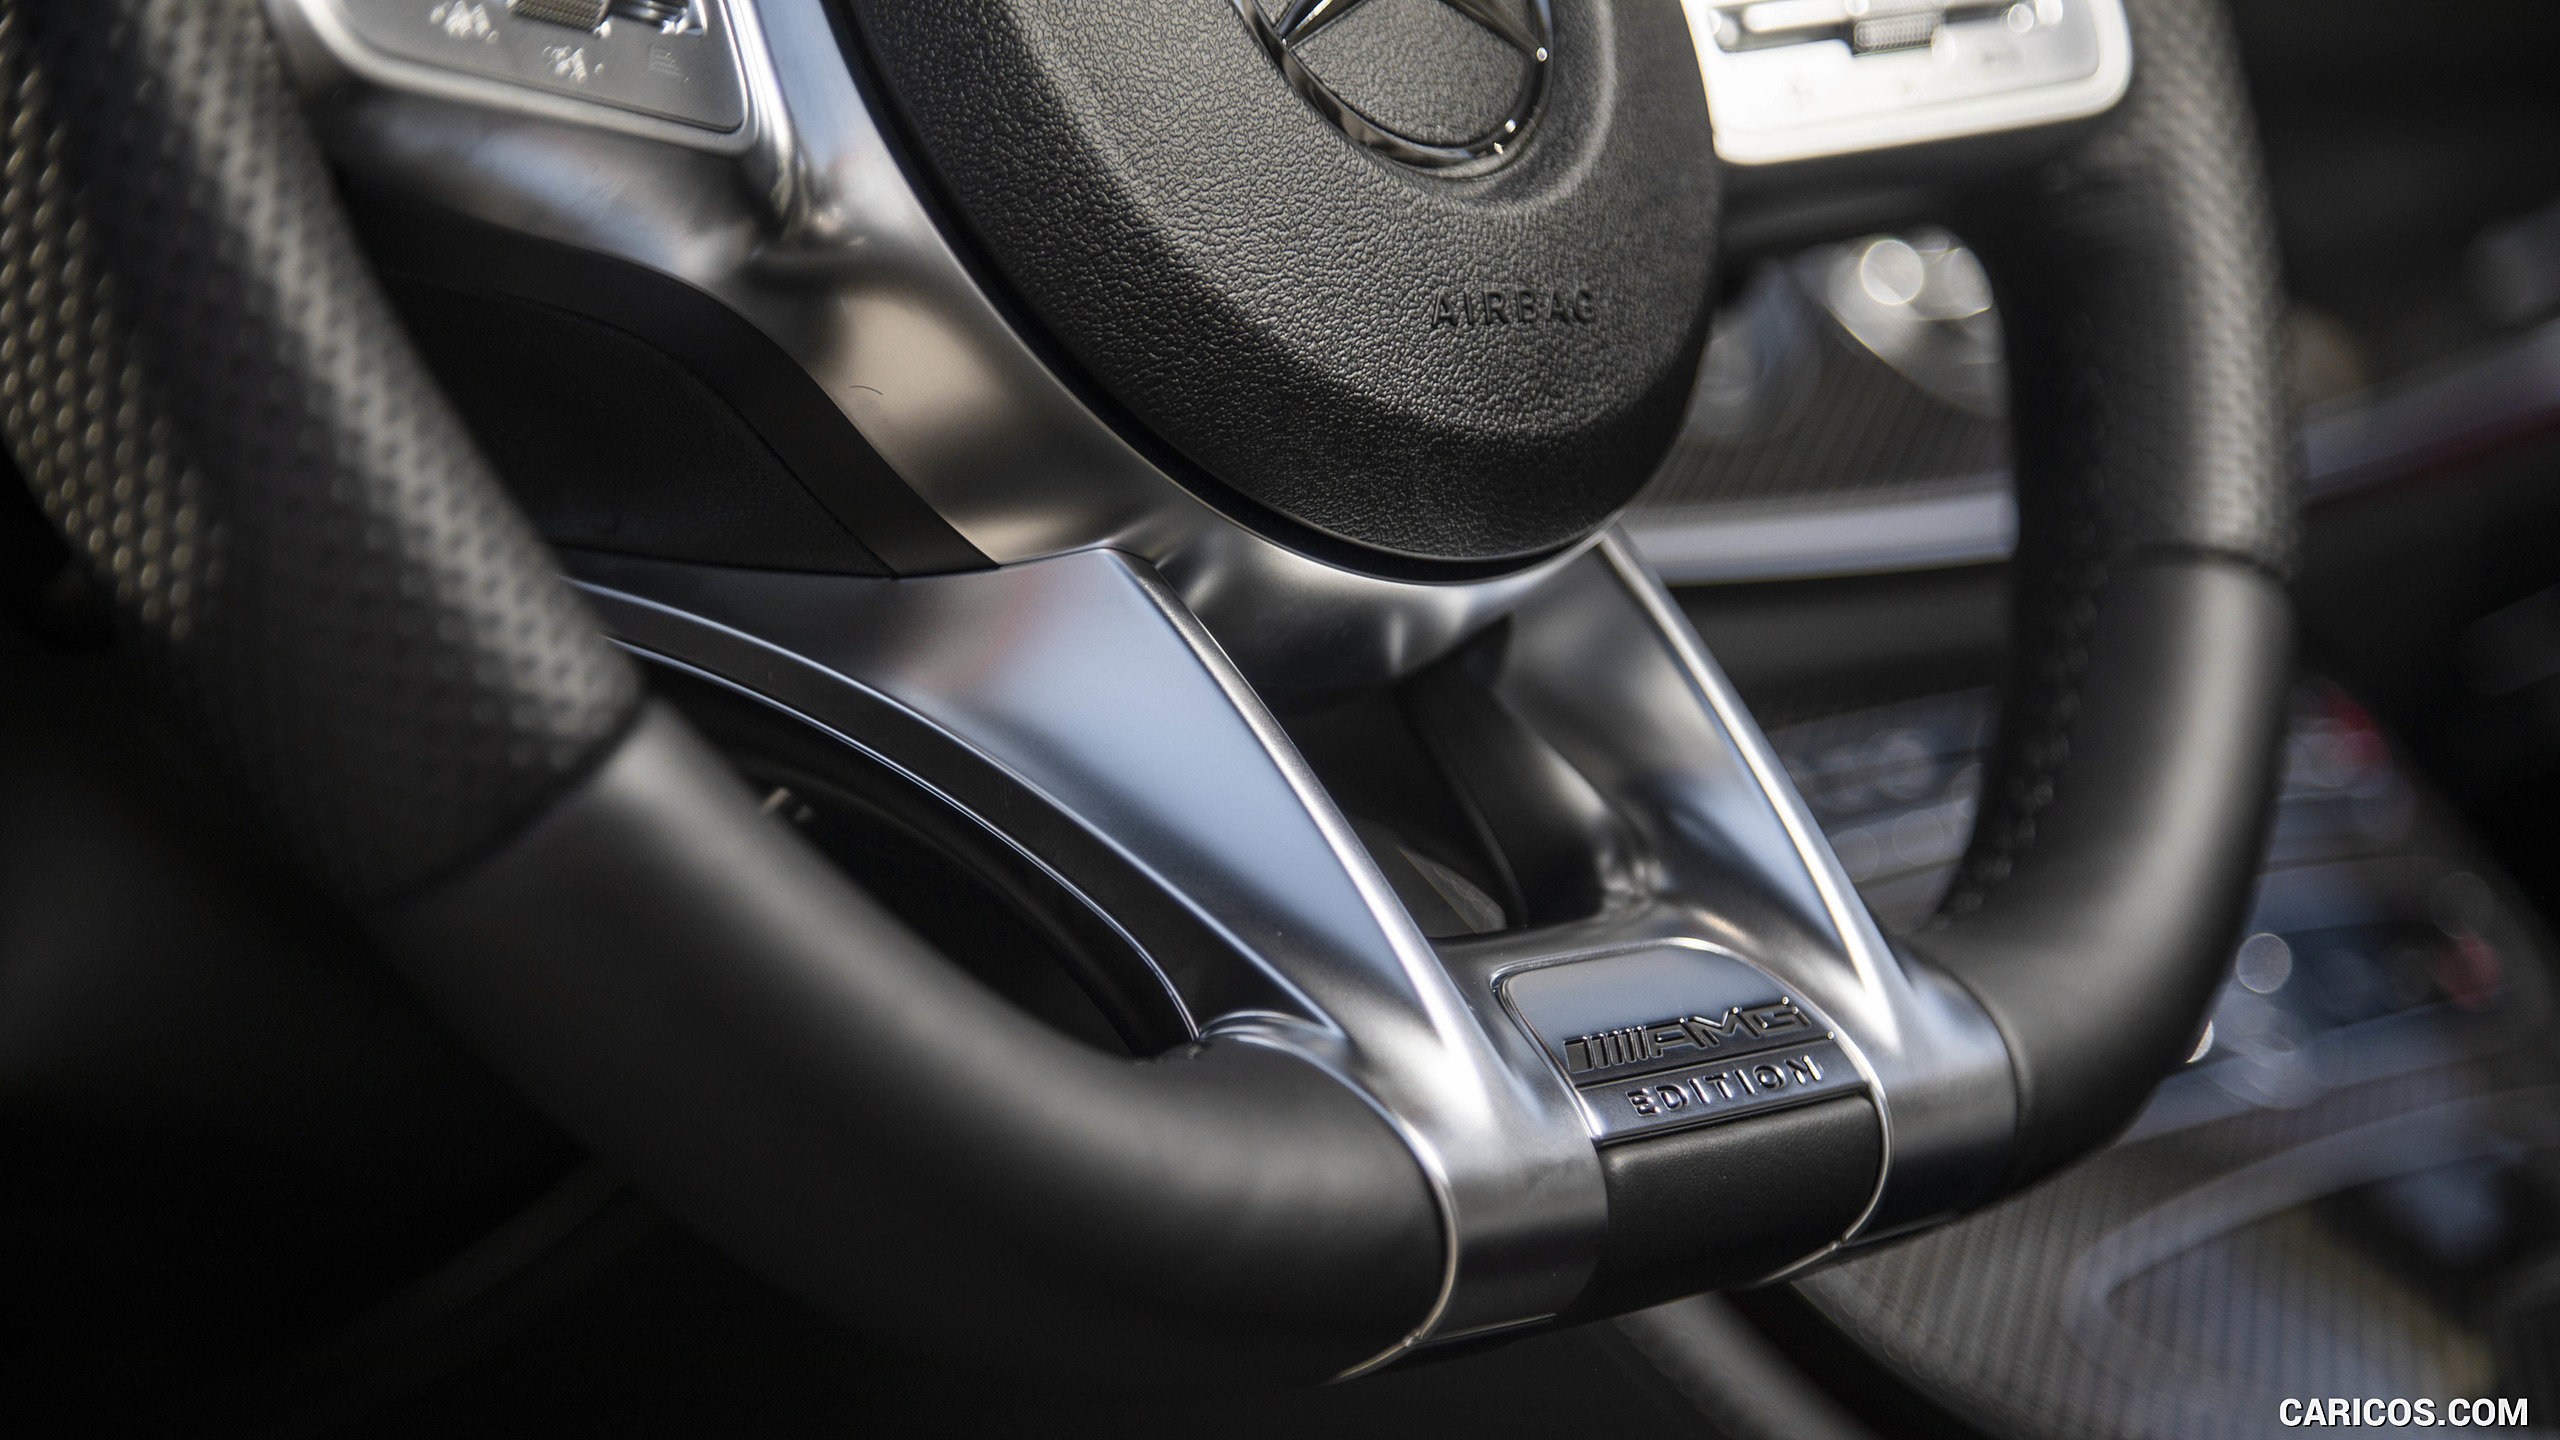 2019 Mercedes-AMG CLS 53 4MATIC+ (US-Spec) - Interior, Steering Wheel, #73 of 84